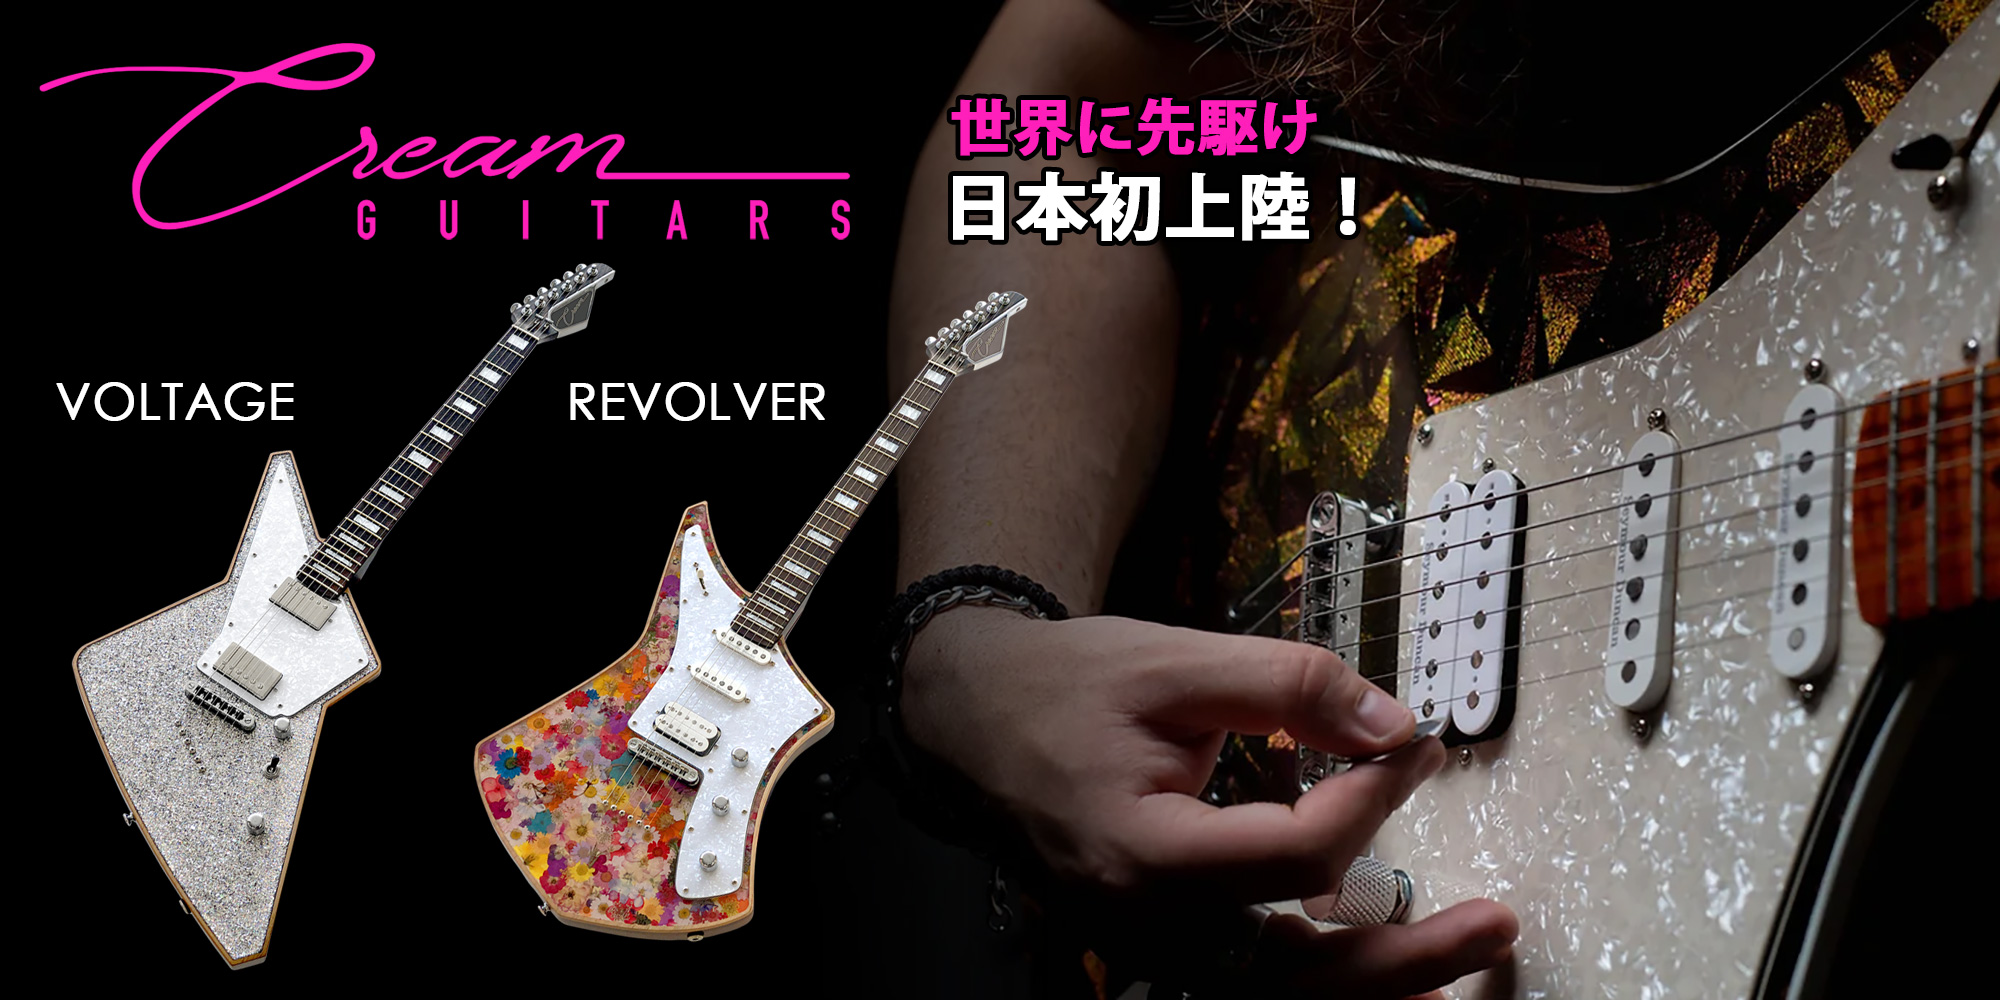 Cream Guitars 世界に先駆け日本初上陸！